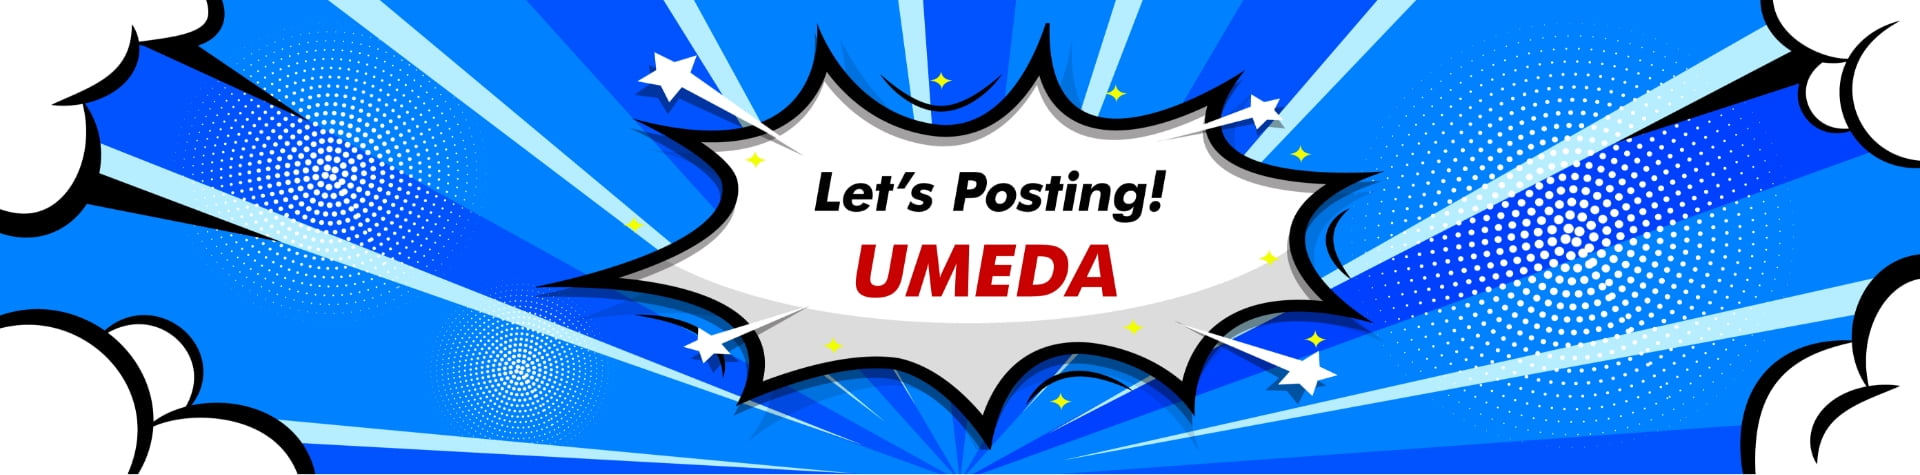 Let's Posting! -umeda-